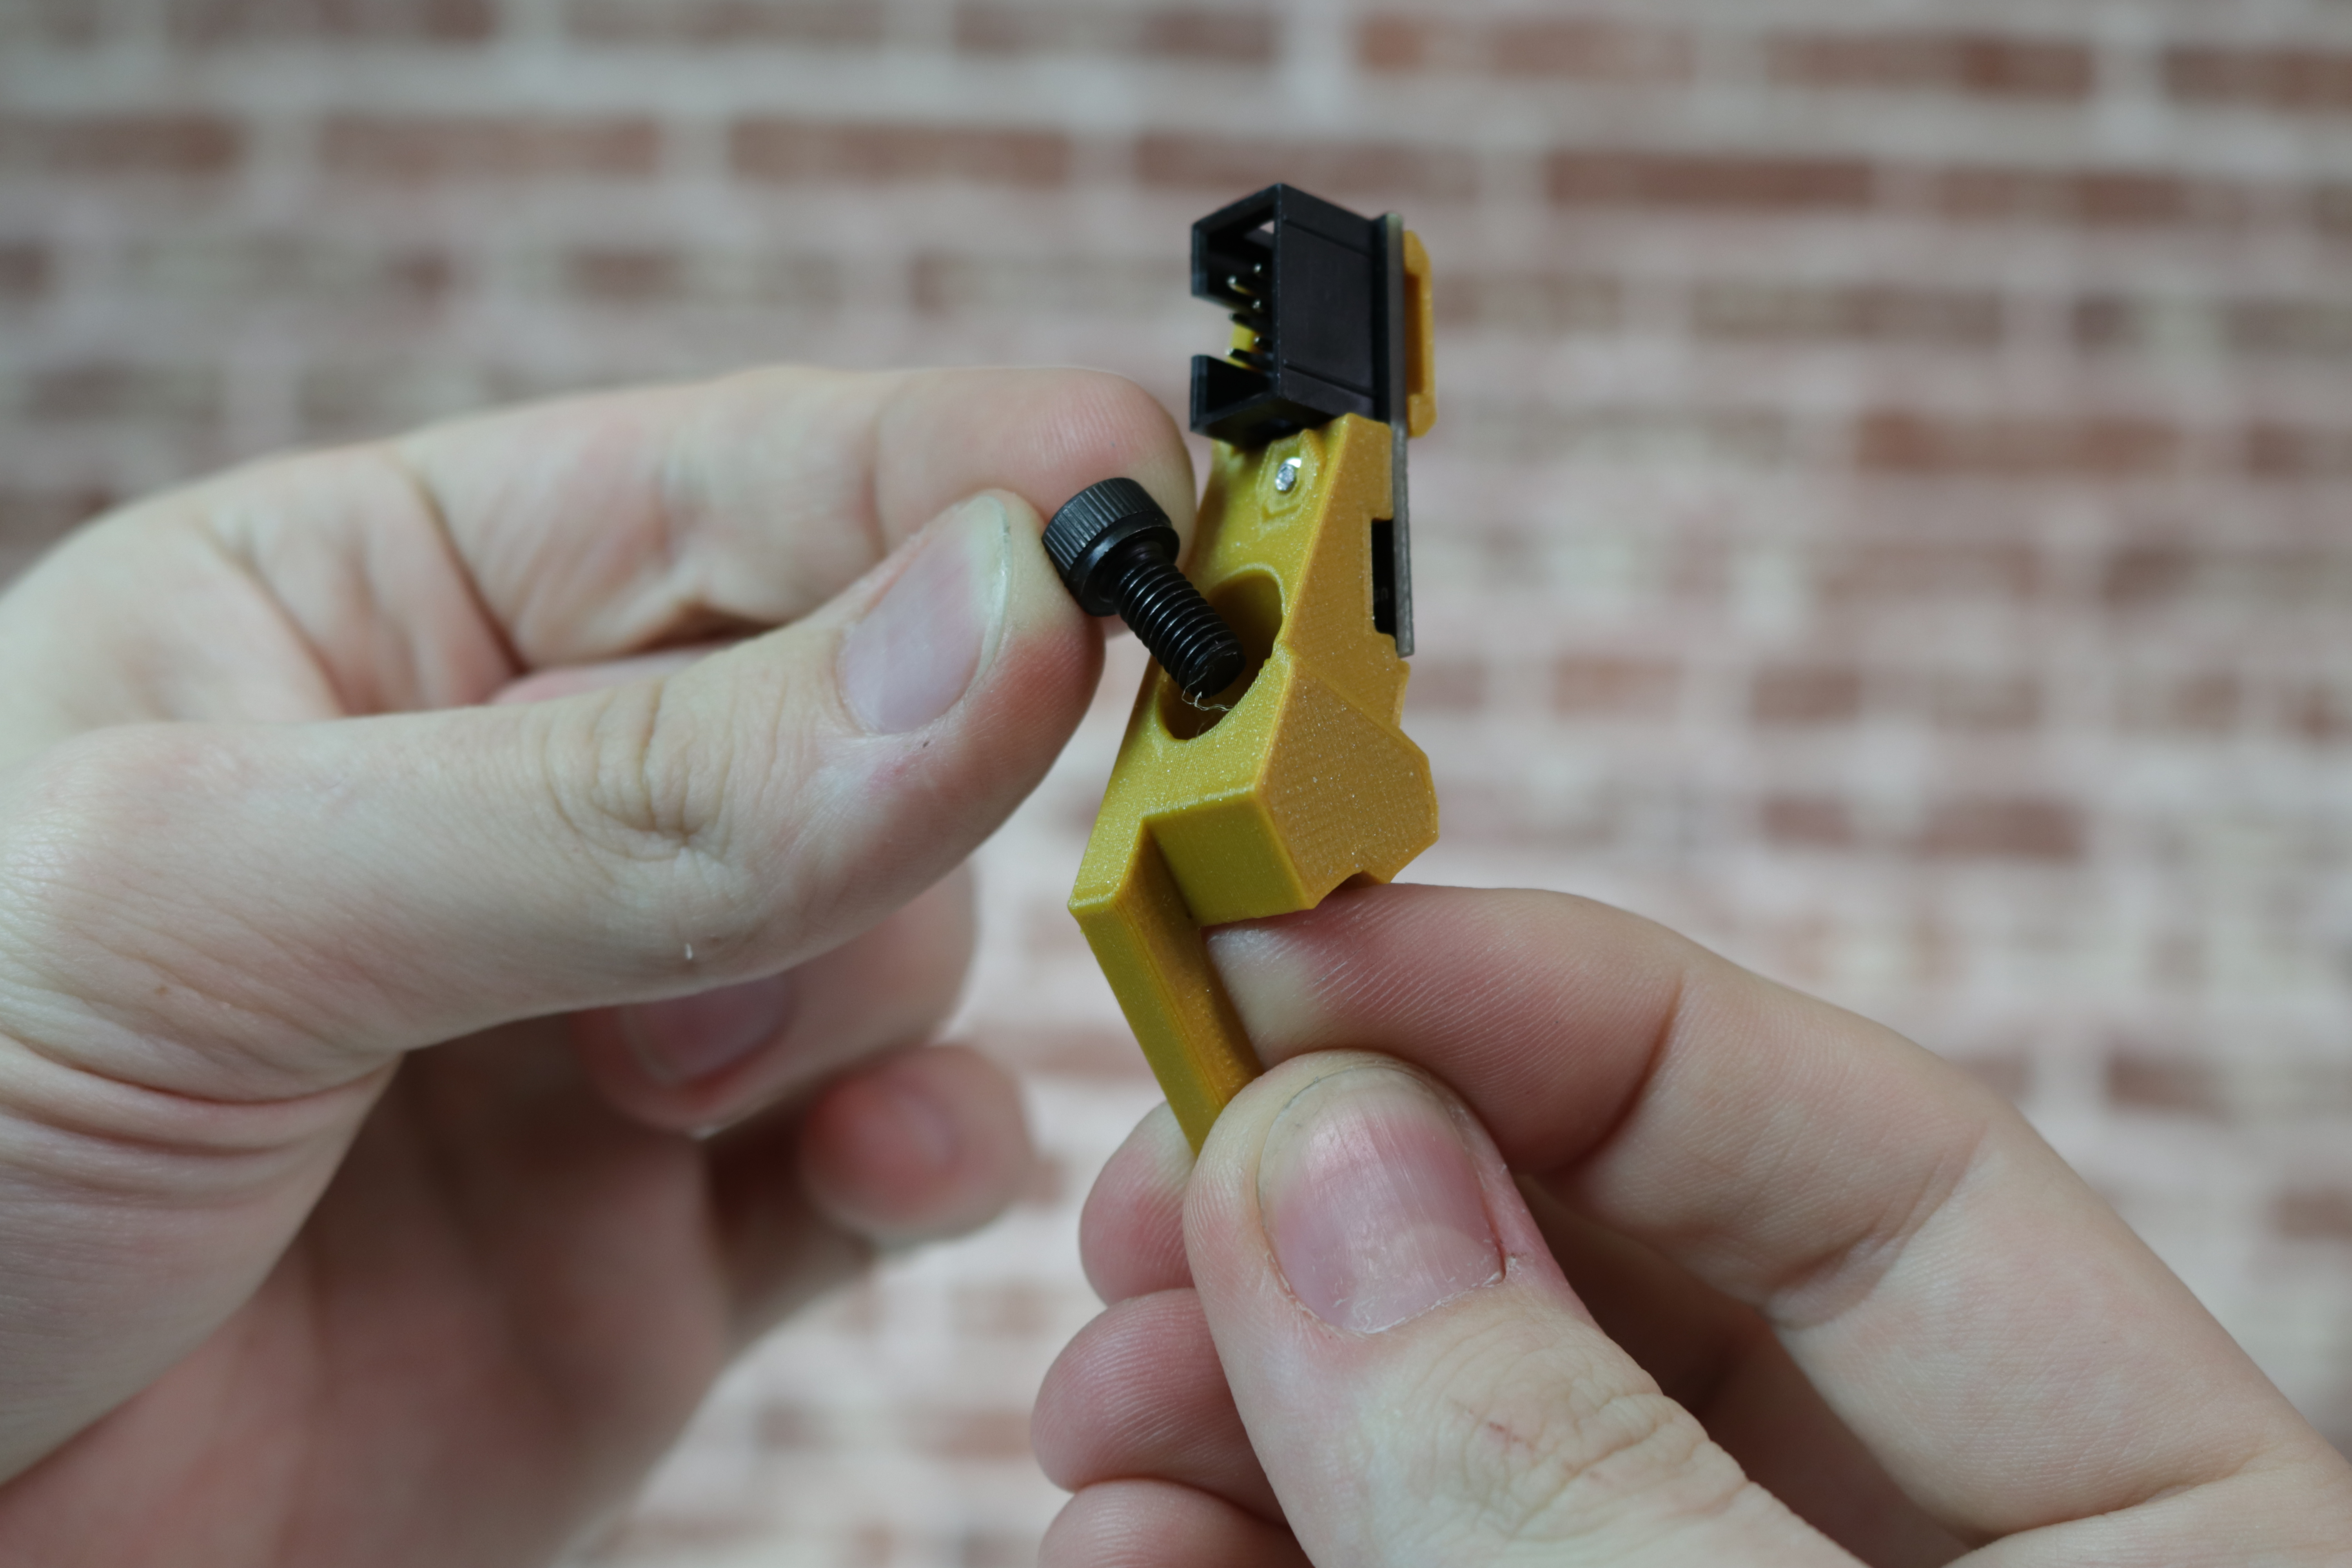 Inserting the M5x10mm screw